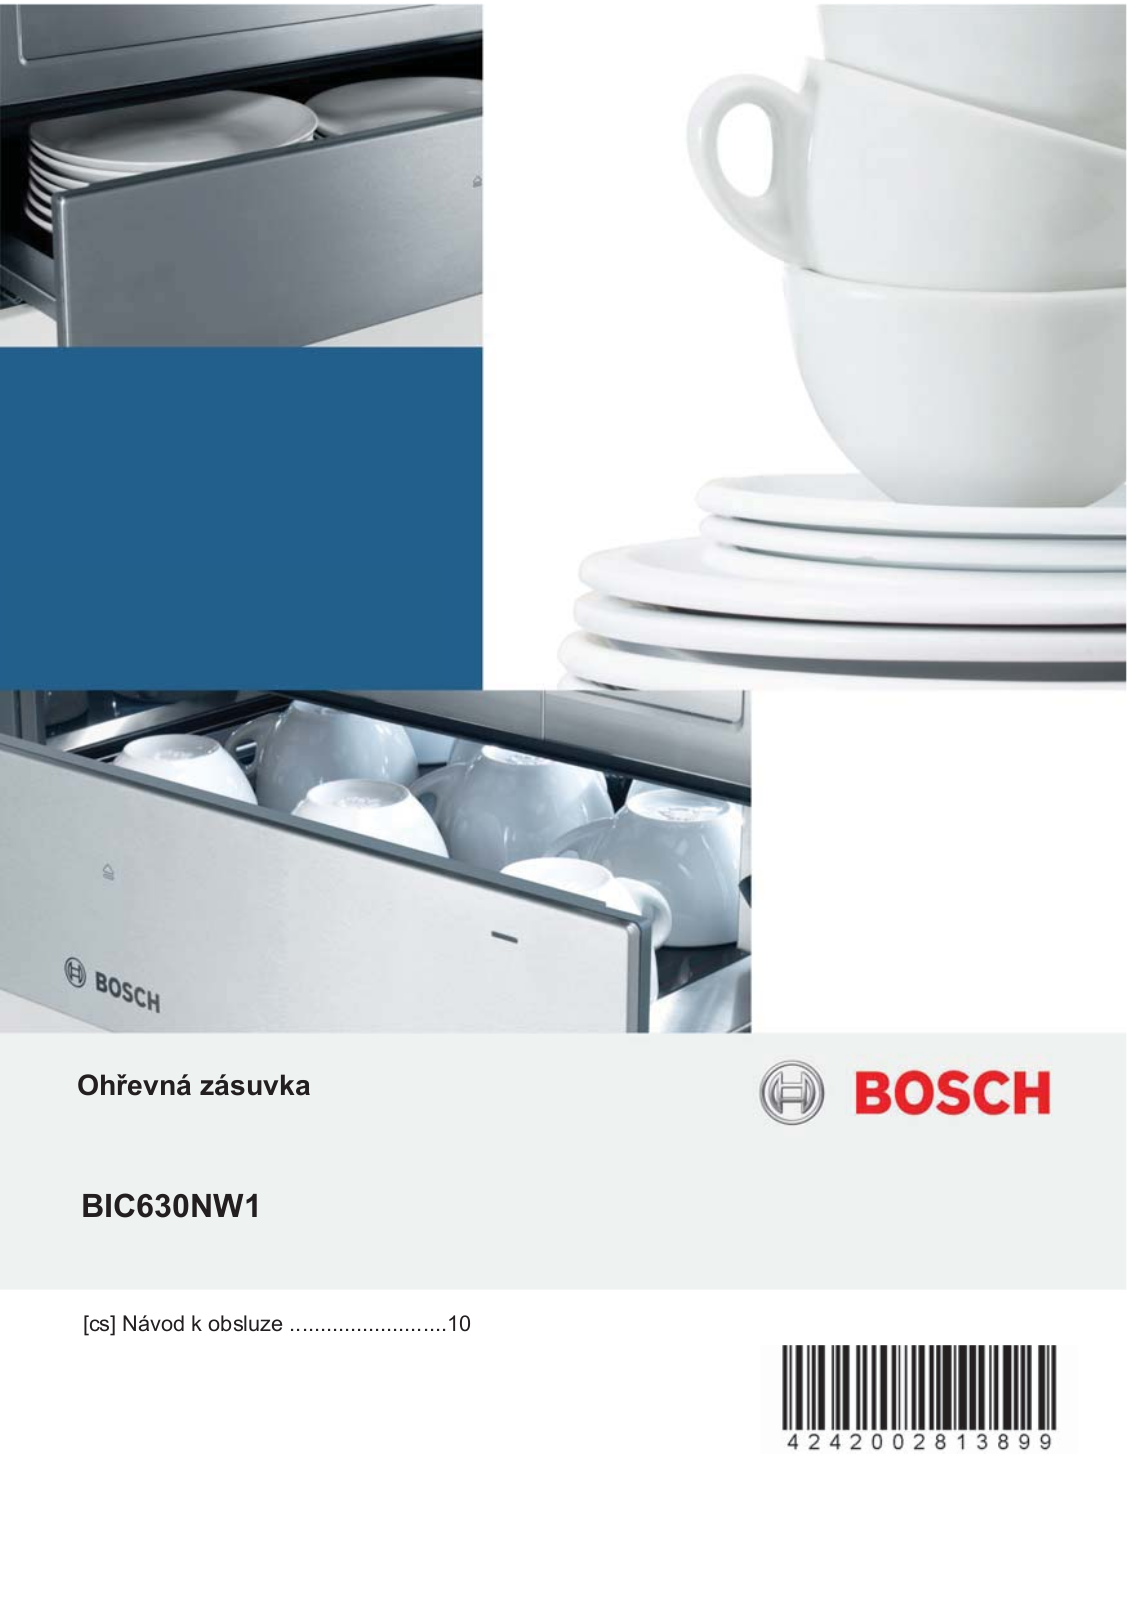 Bosch BIC630NW1 User Manual